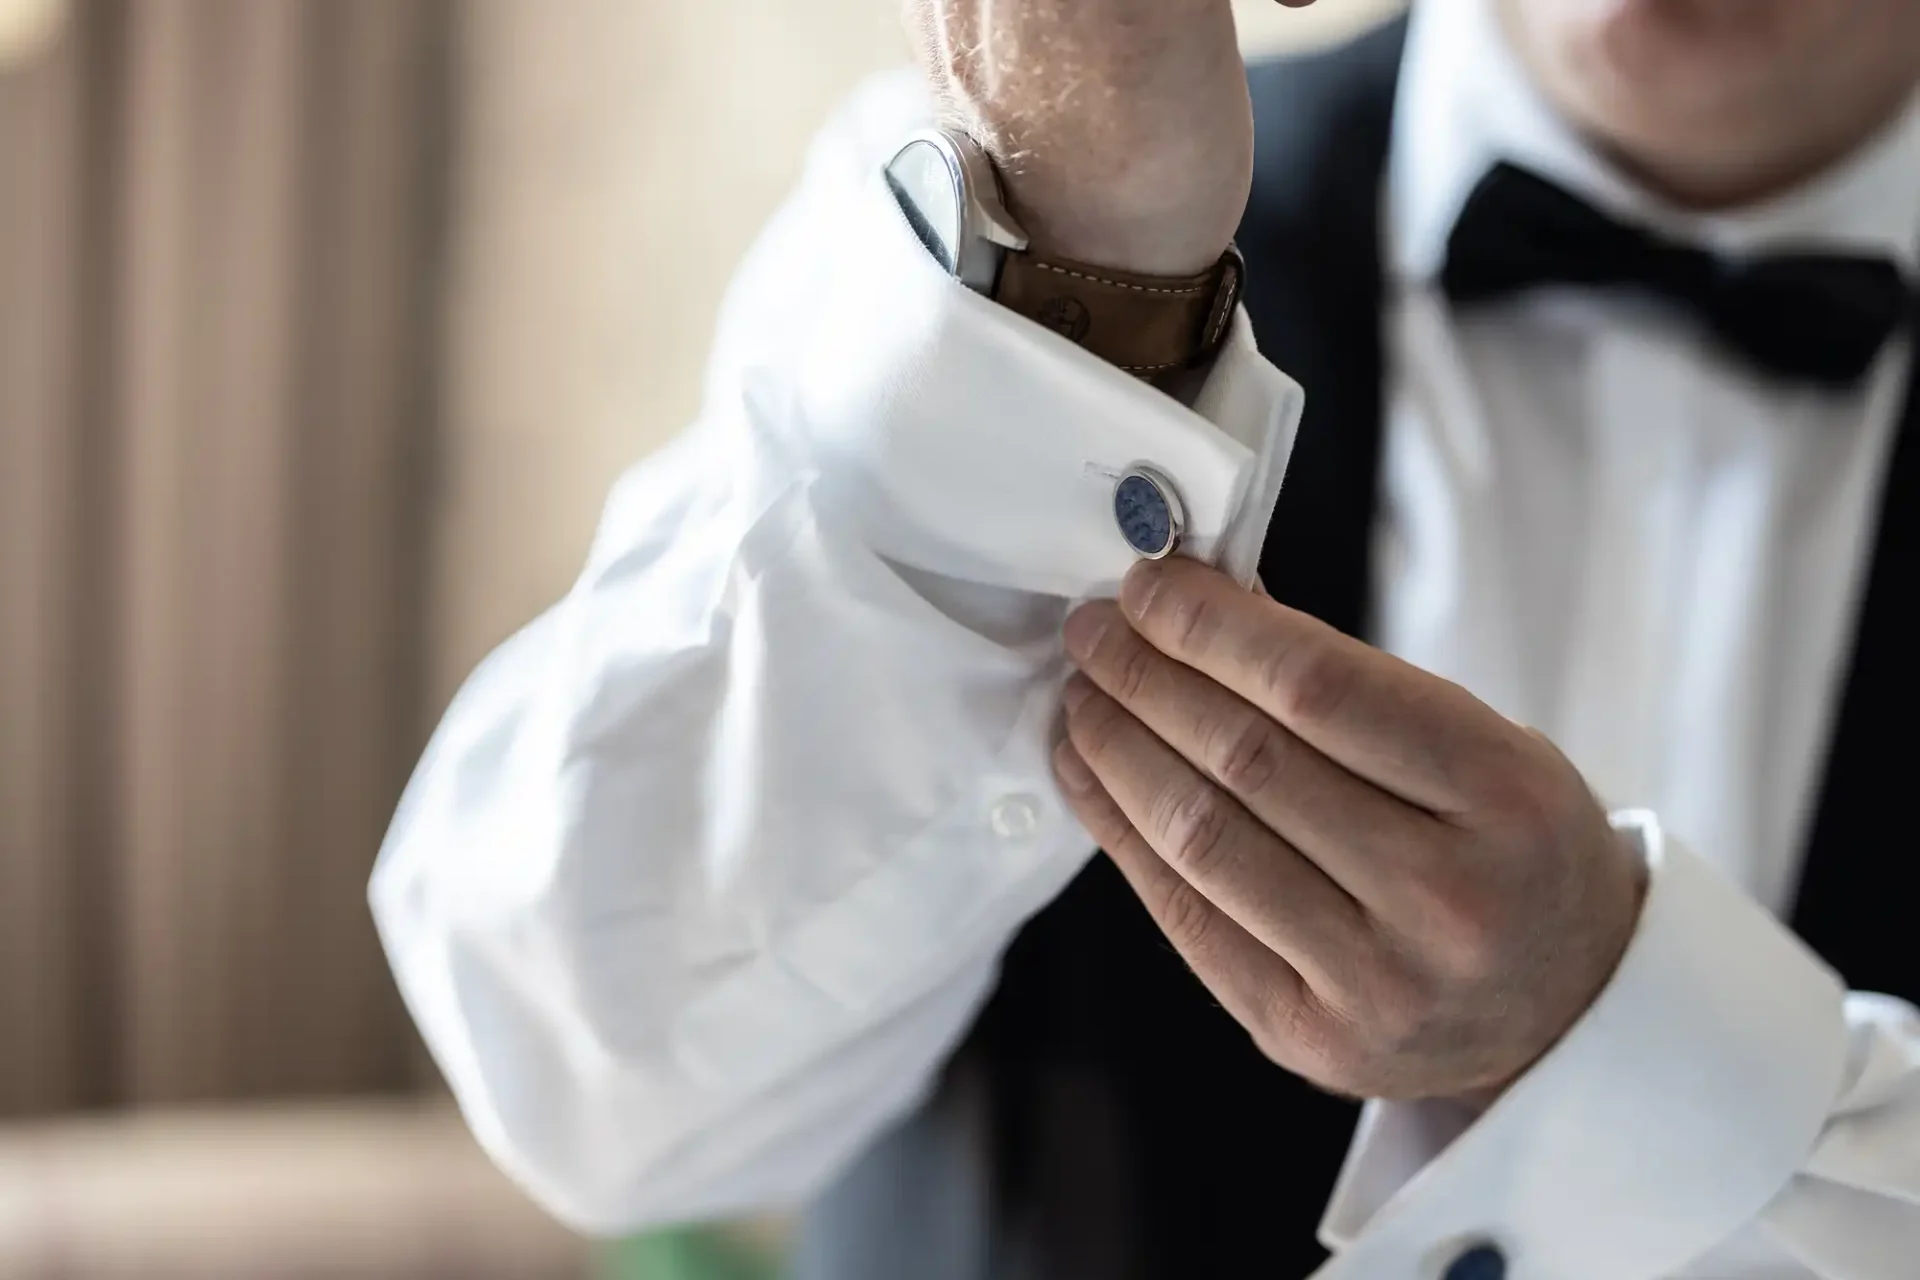 A man in a tuxedo adjusts his cufflink.